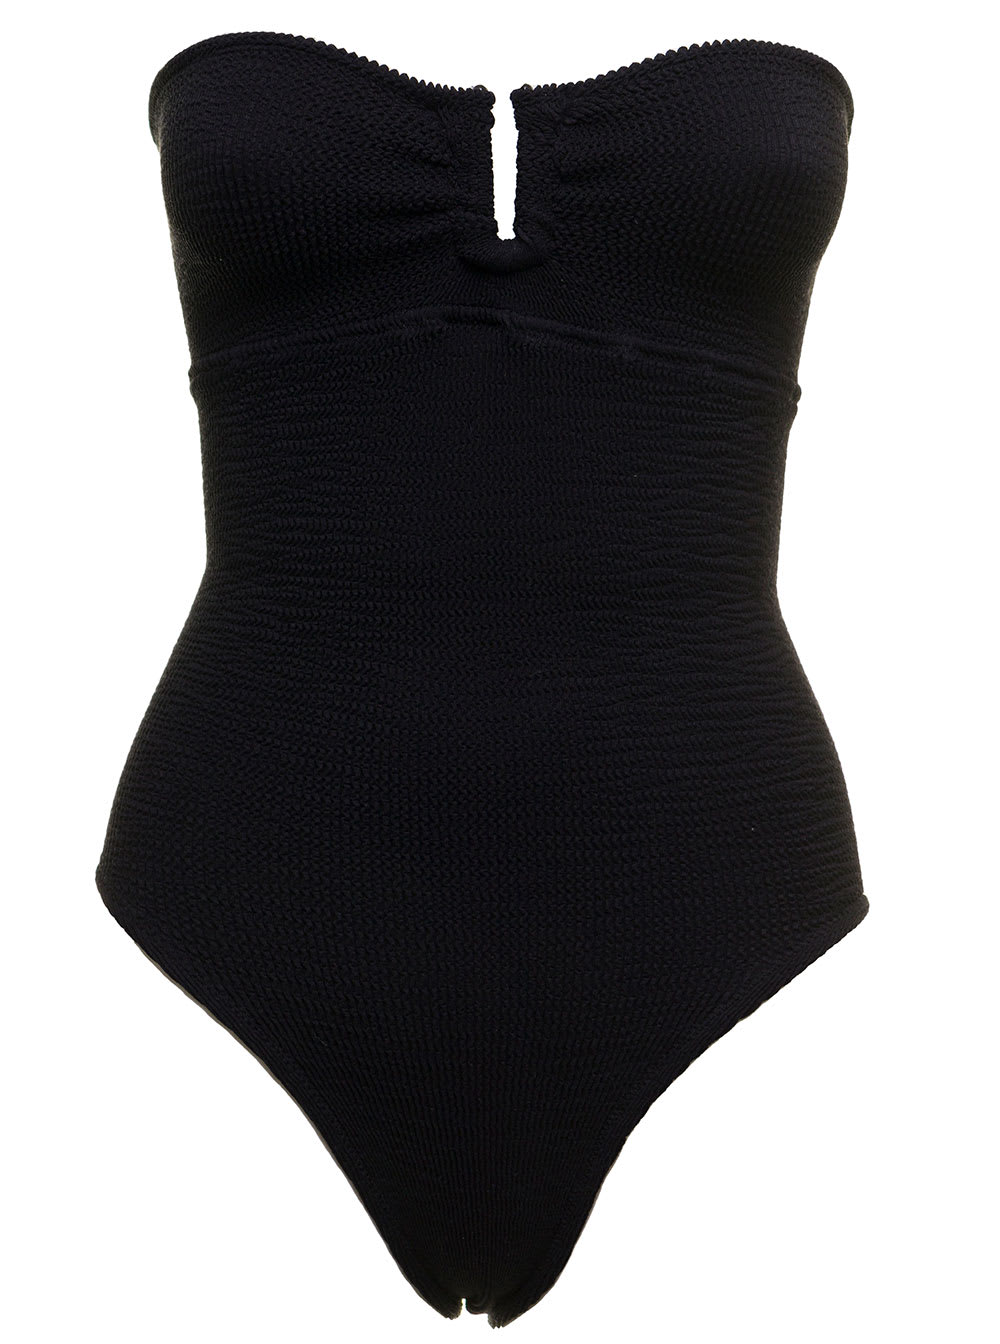 Reina Olga Womans Sleeveless Black Crinkled One-piece Swimsuit